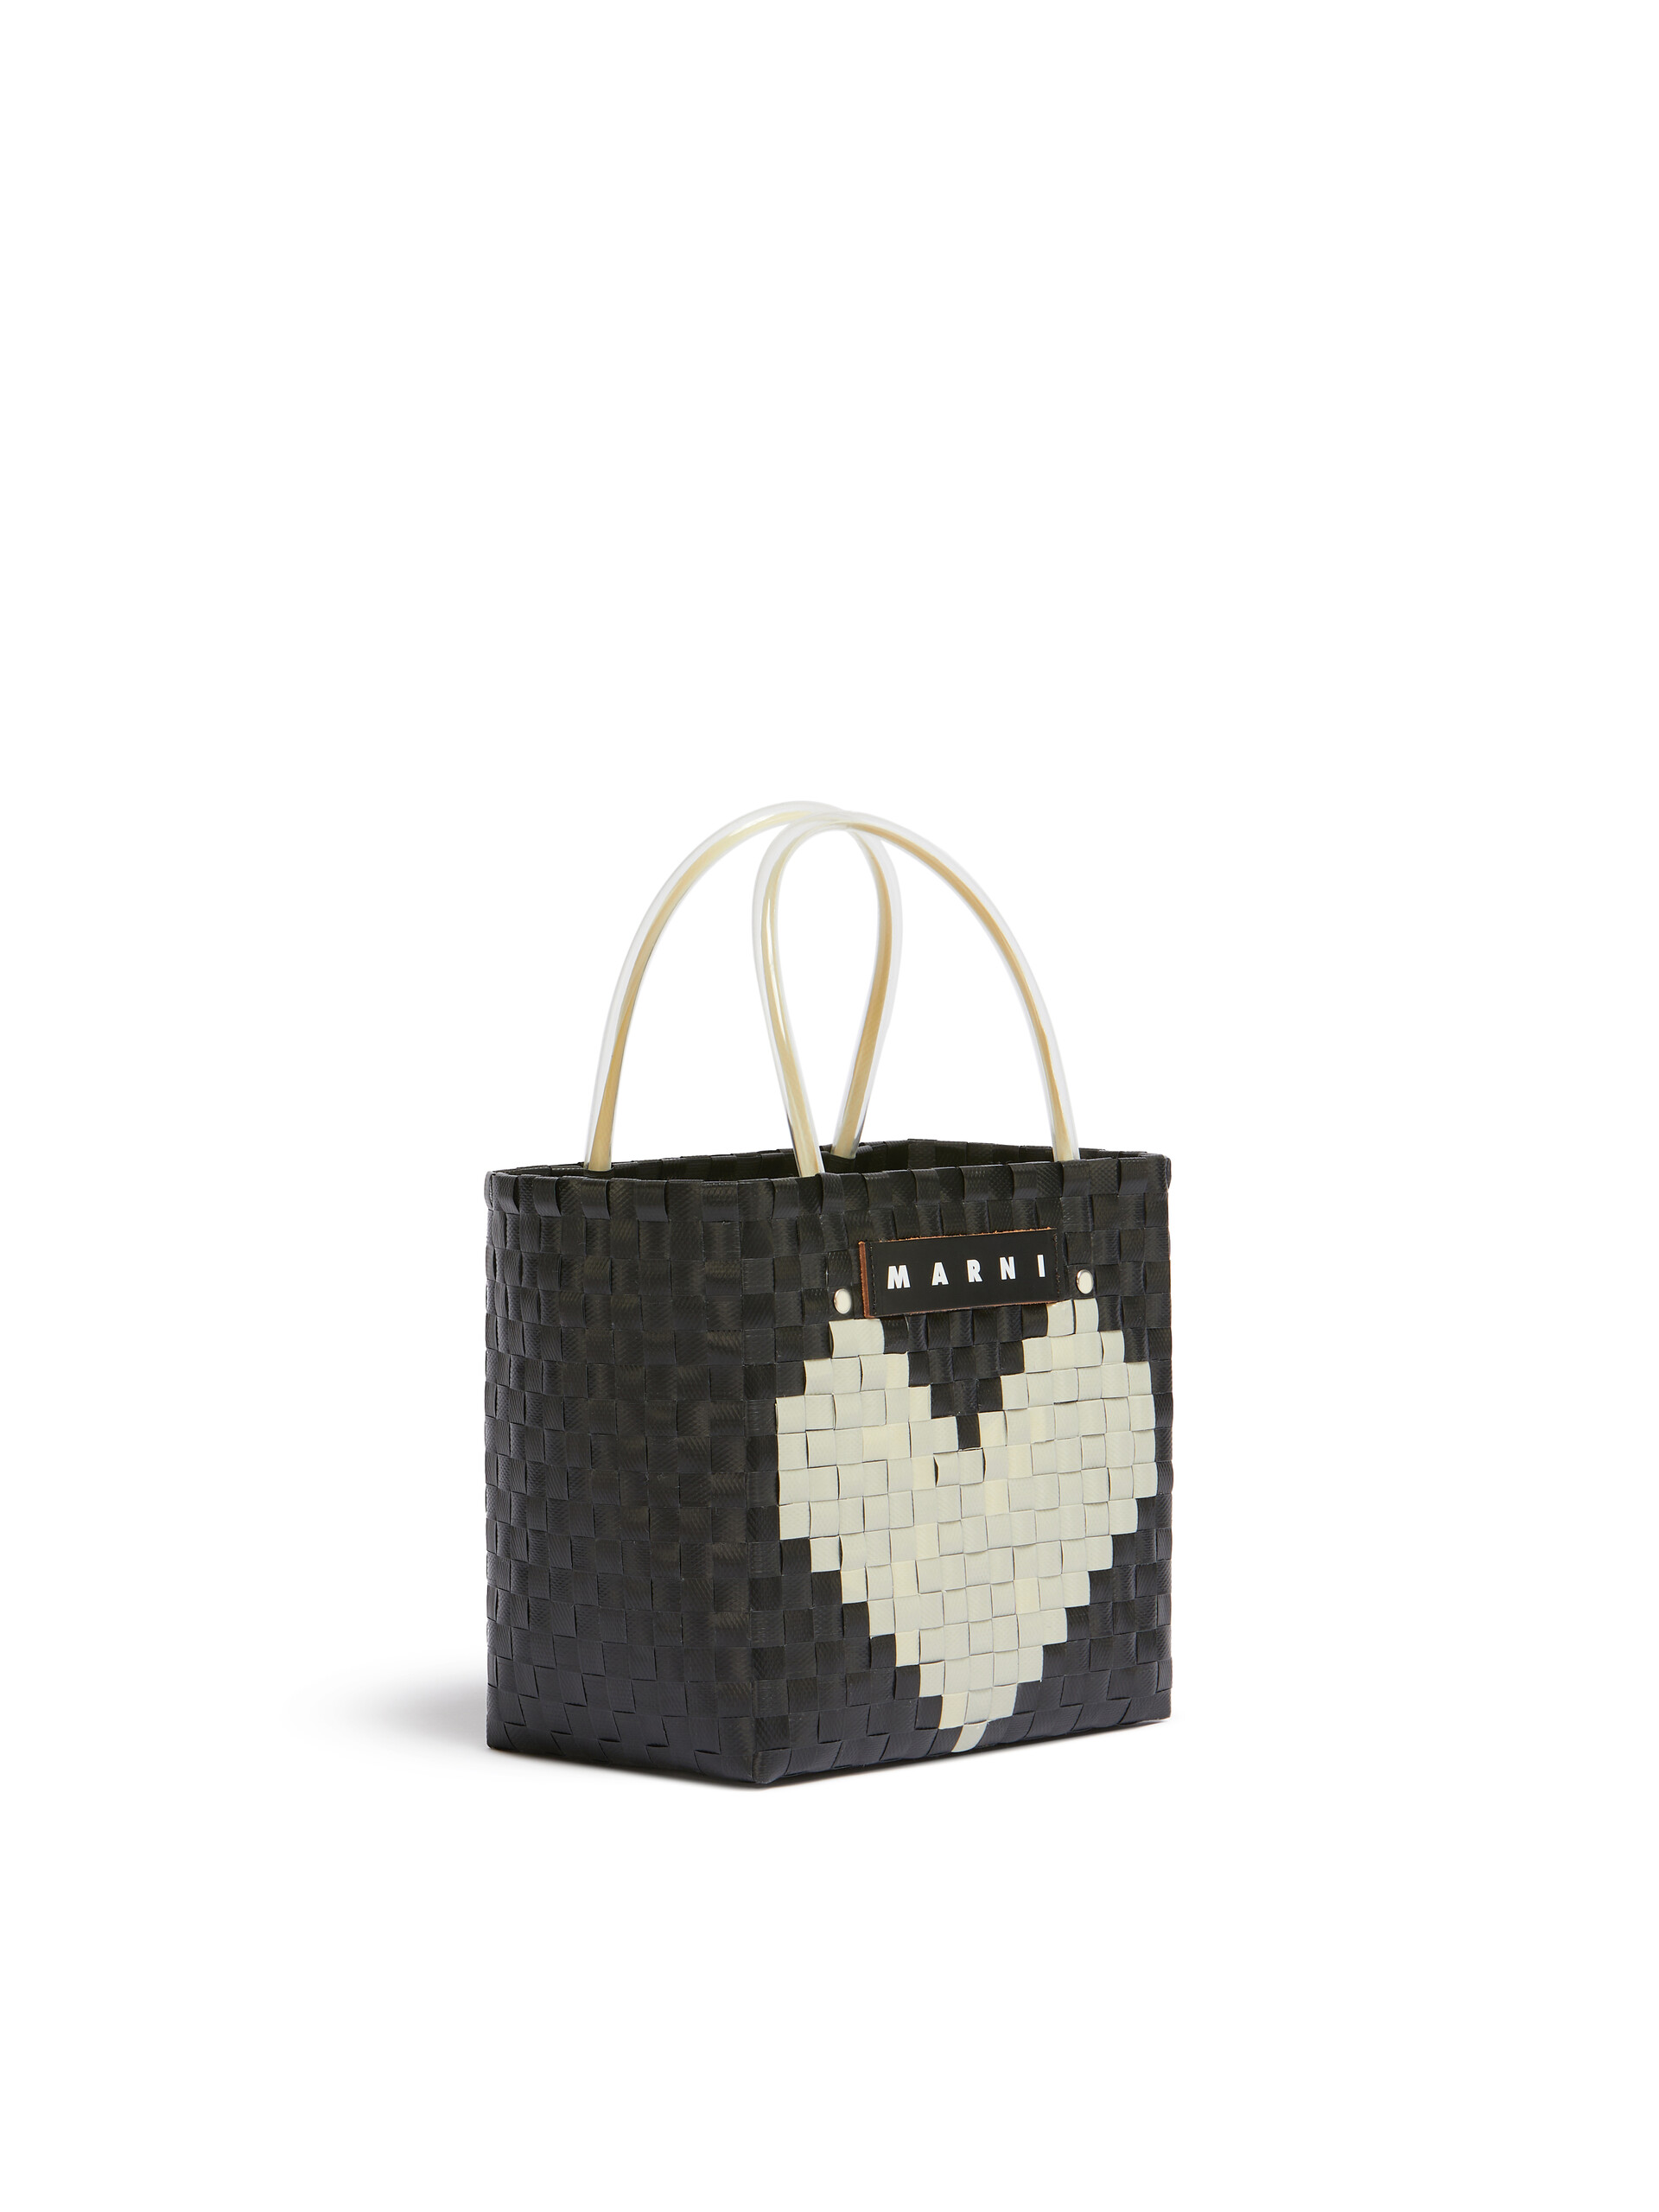 Marni Market Love Mini Basket Bag with black heart - Shopping Bags - Image 2